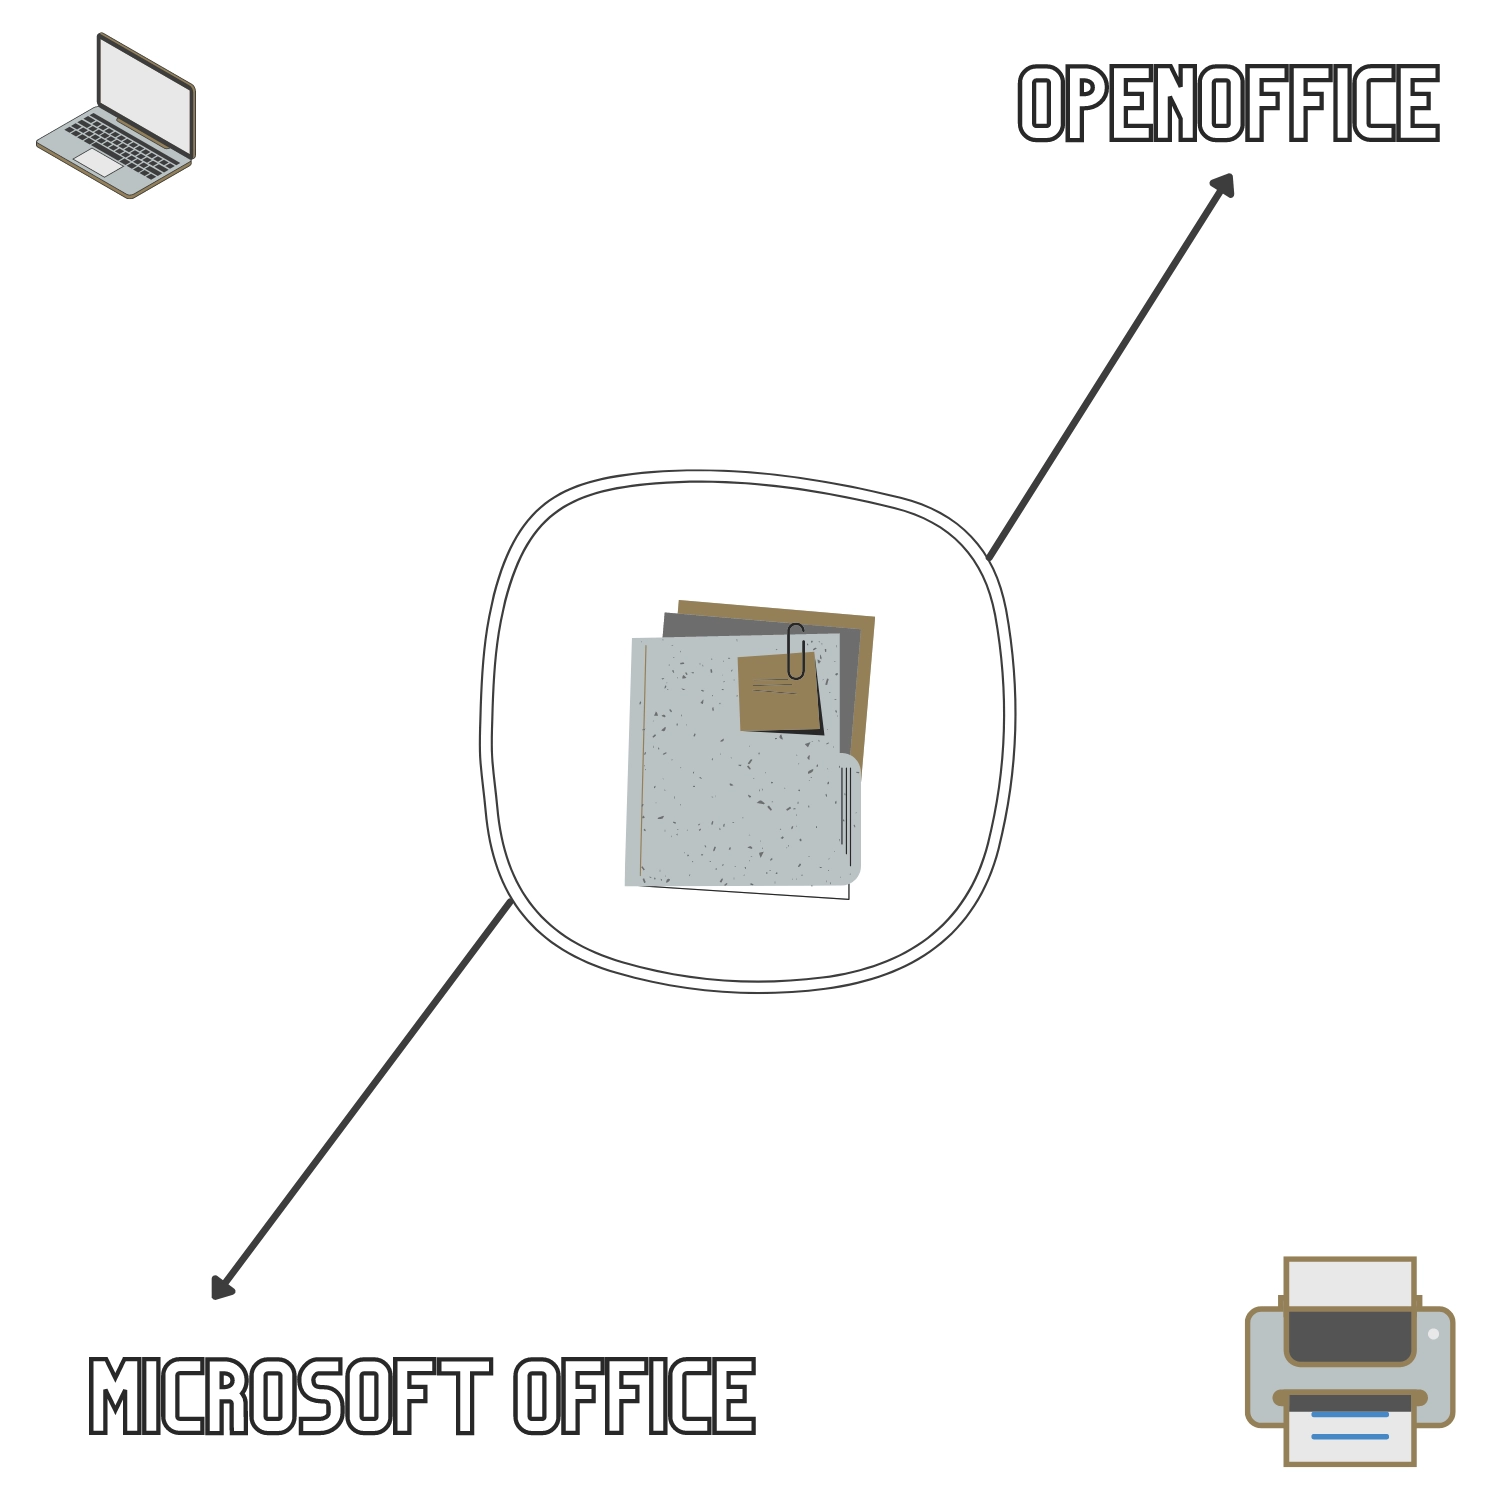 OpenOffice vs. Microsoft Office